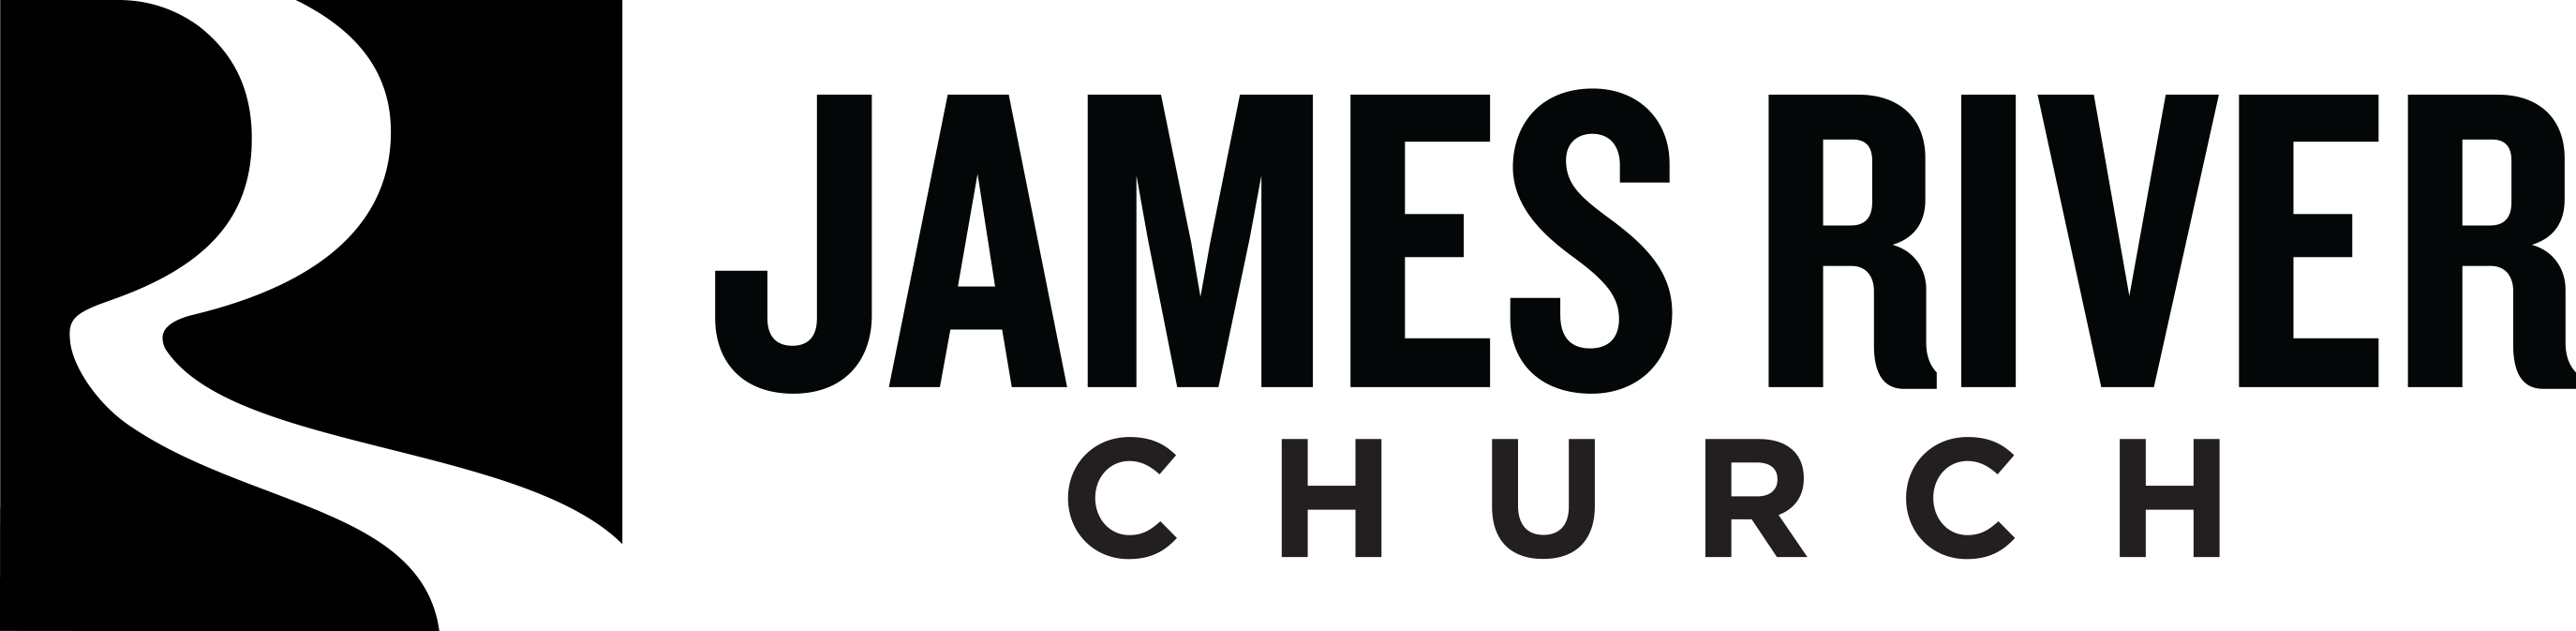 James_River_Church_logo